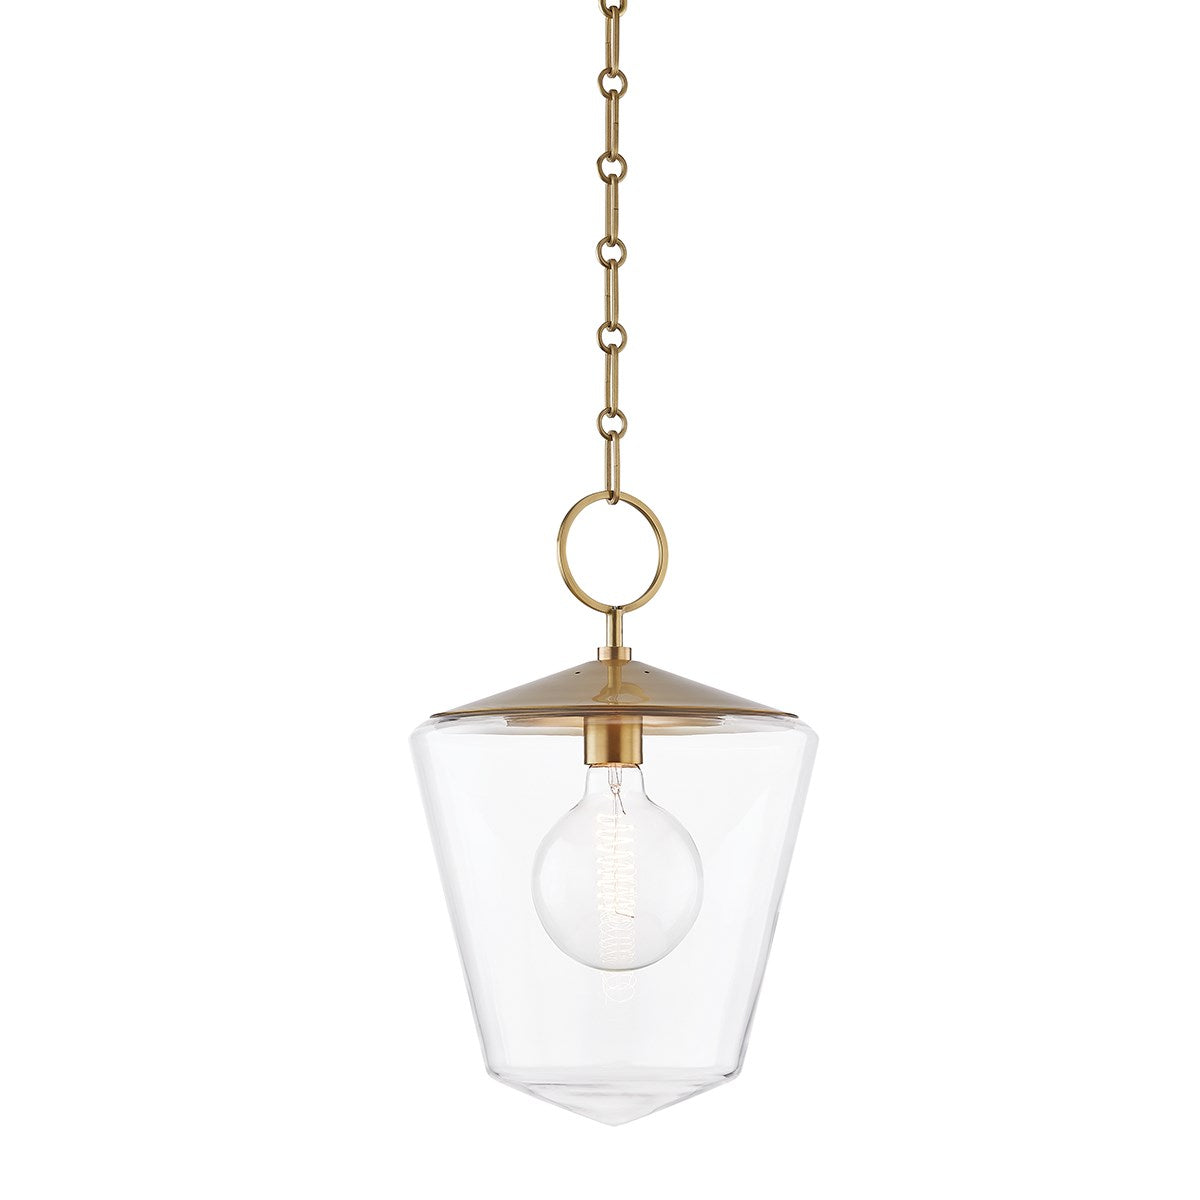 Greene - 1 LIGHT LARGE PENDANT Lantern Hudson Valley Lighting Aged Brass  